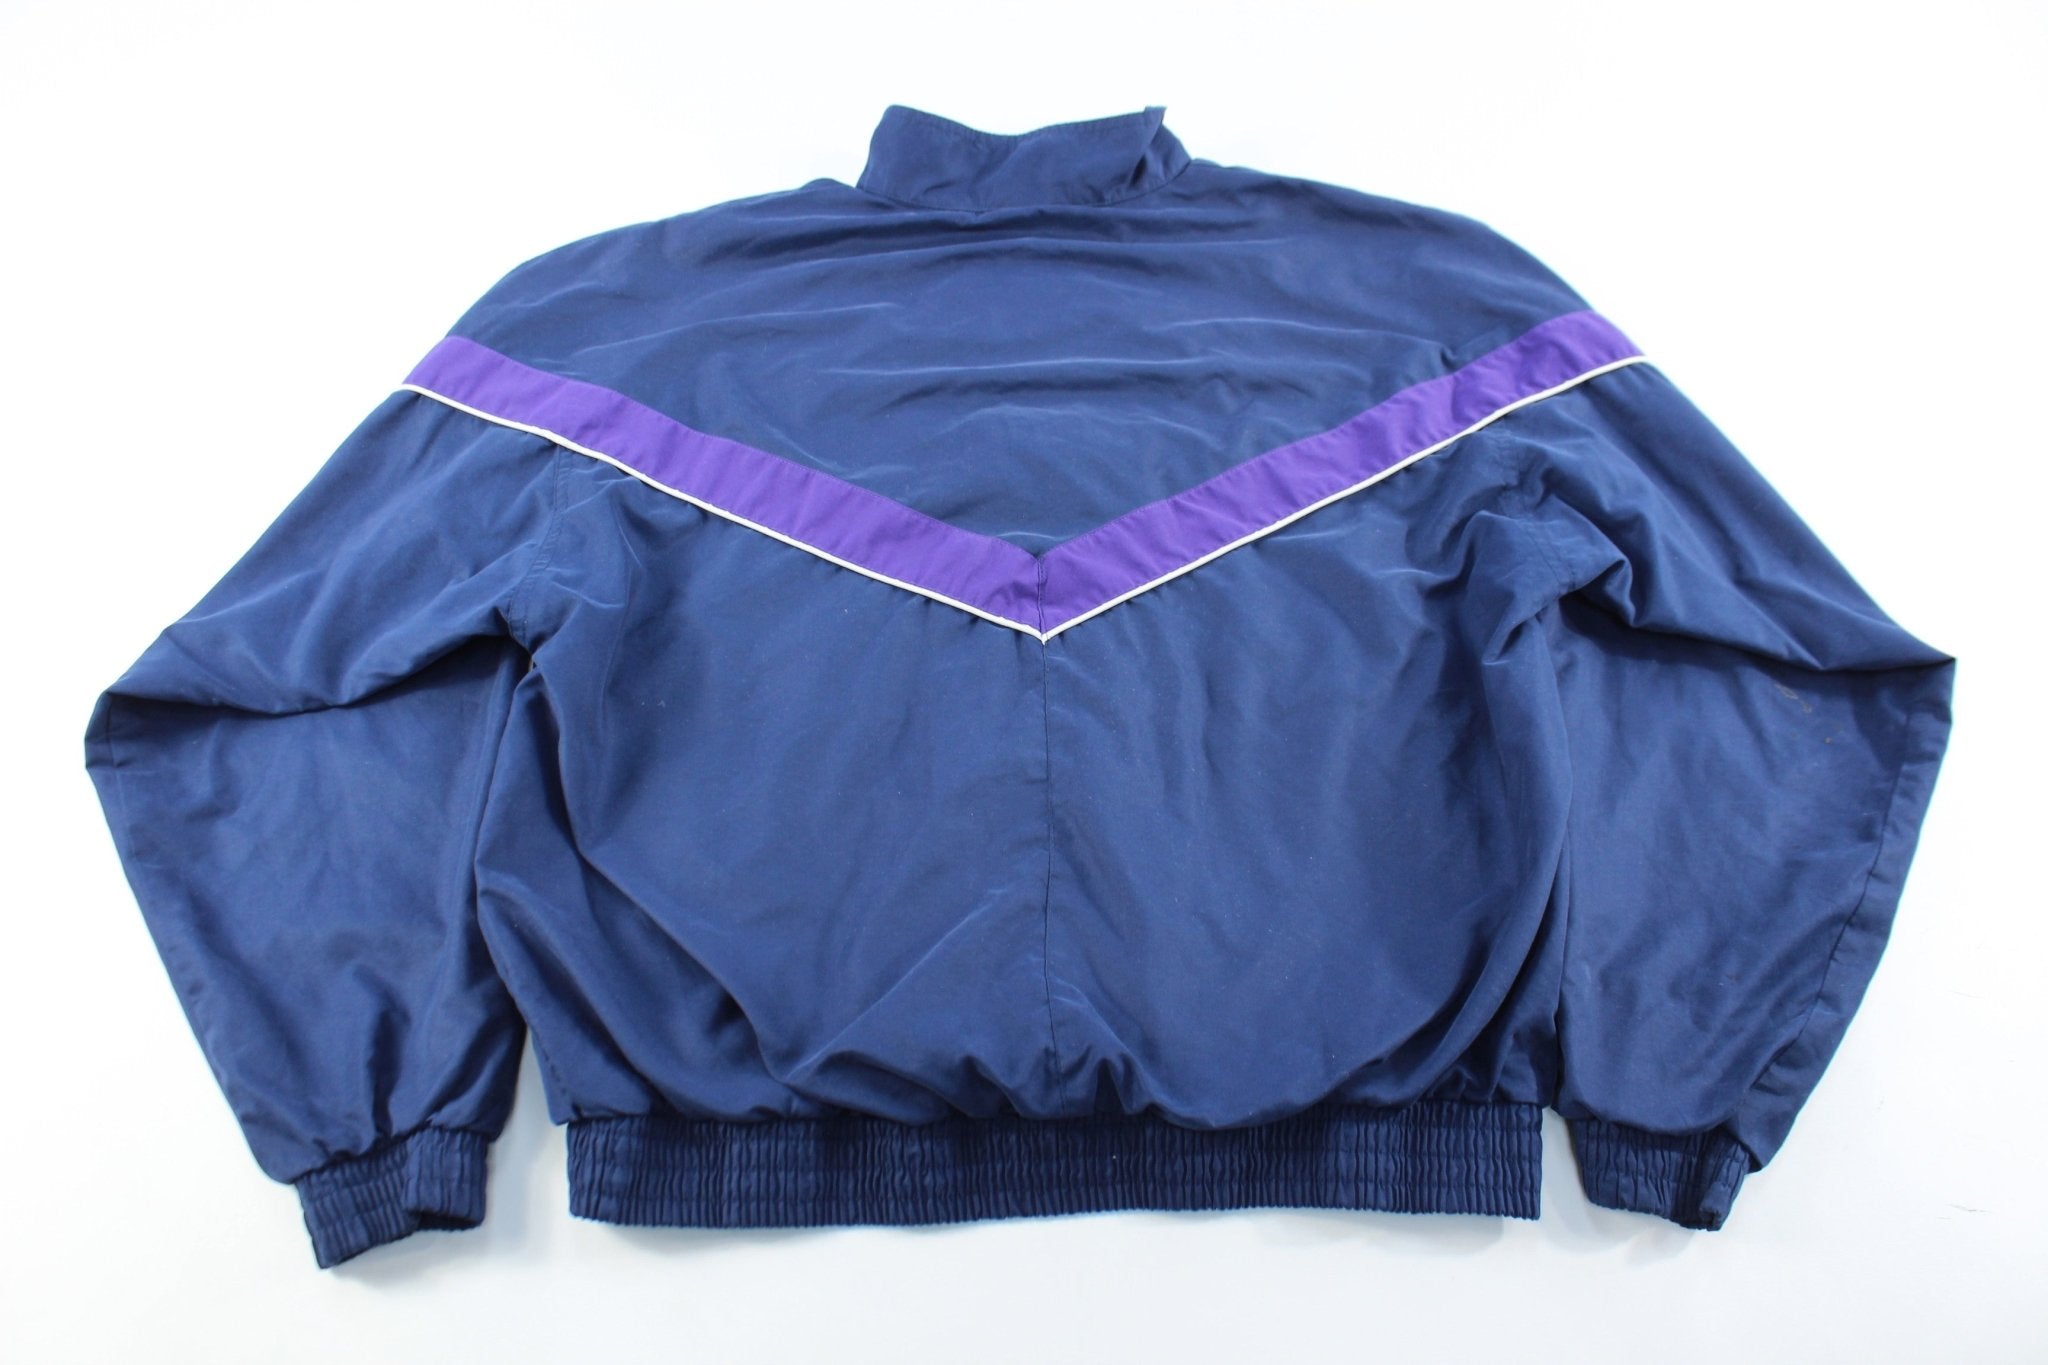 Reebok Embroidered Logo Navy Blue & Purple Zip Up Jacket - ThriftedThreads.com